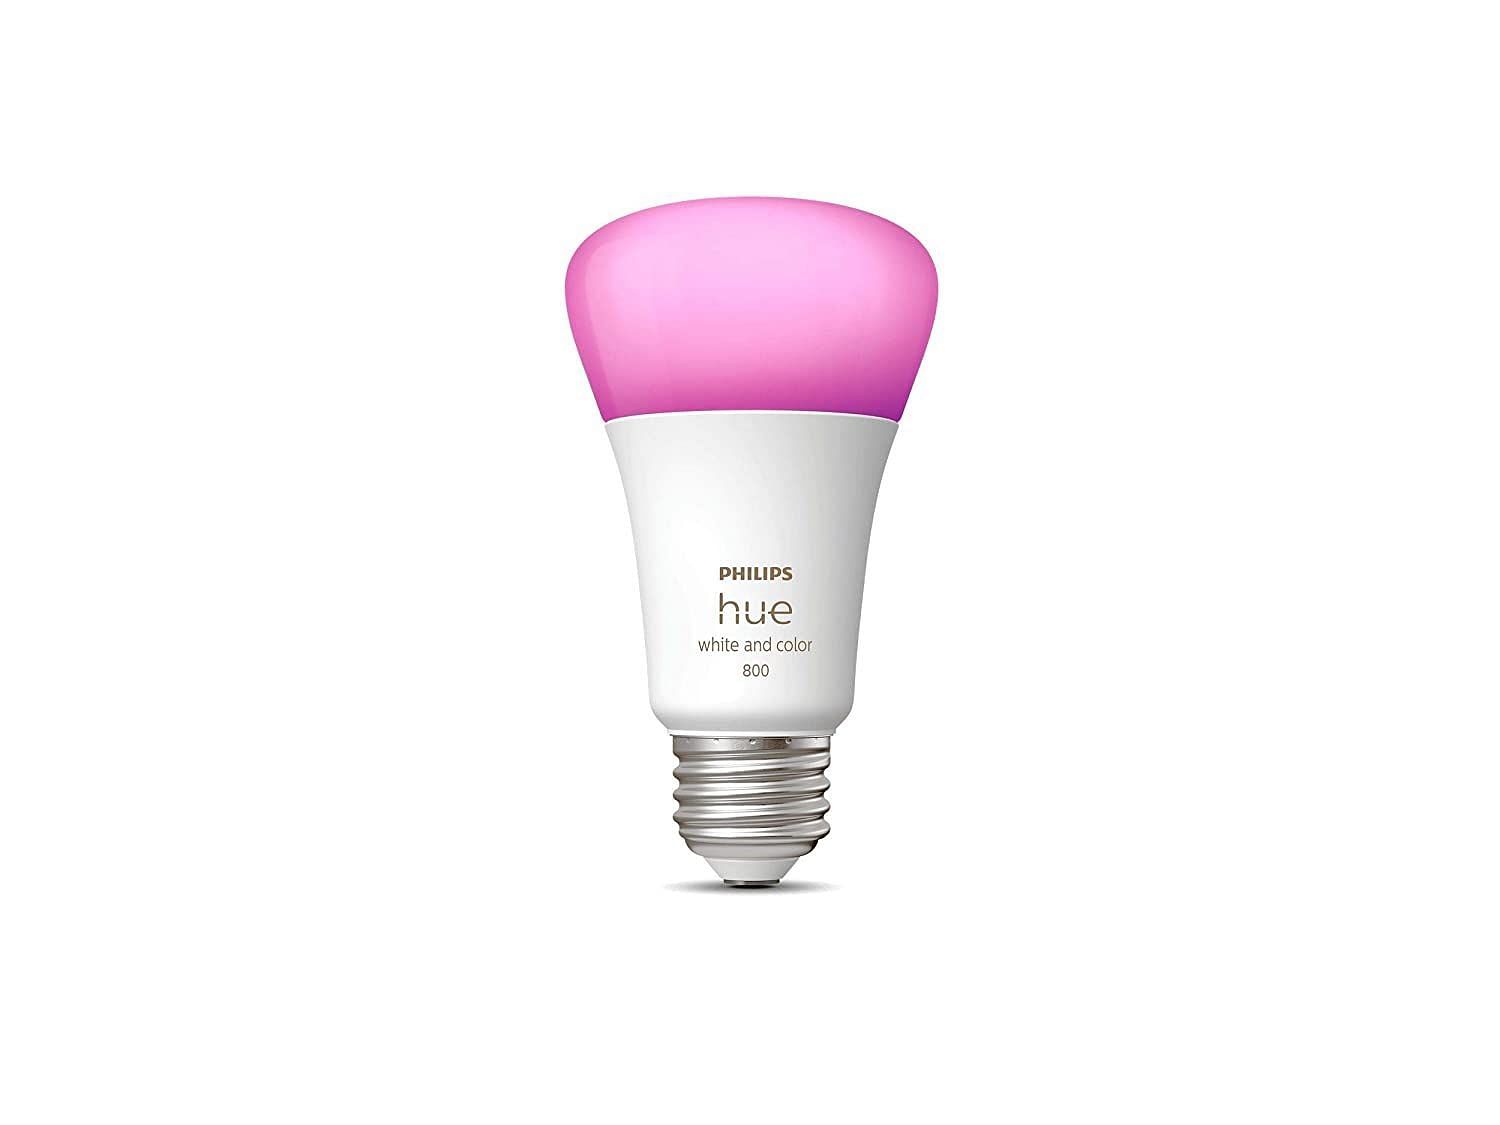 The Philips Hue Gen 3 smart bulb (Image via Amazon)